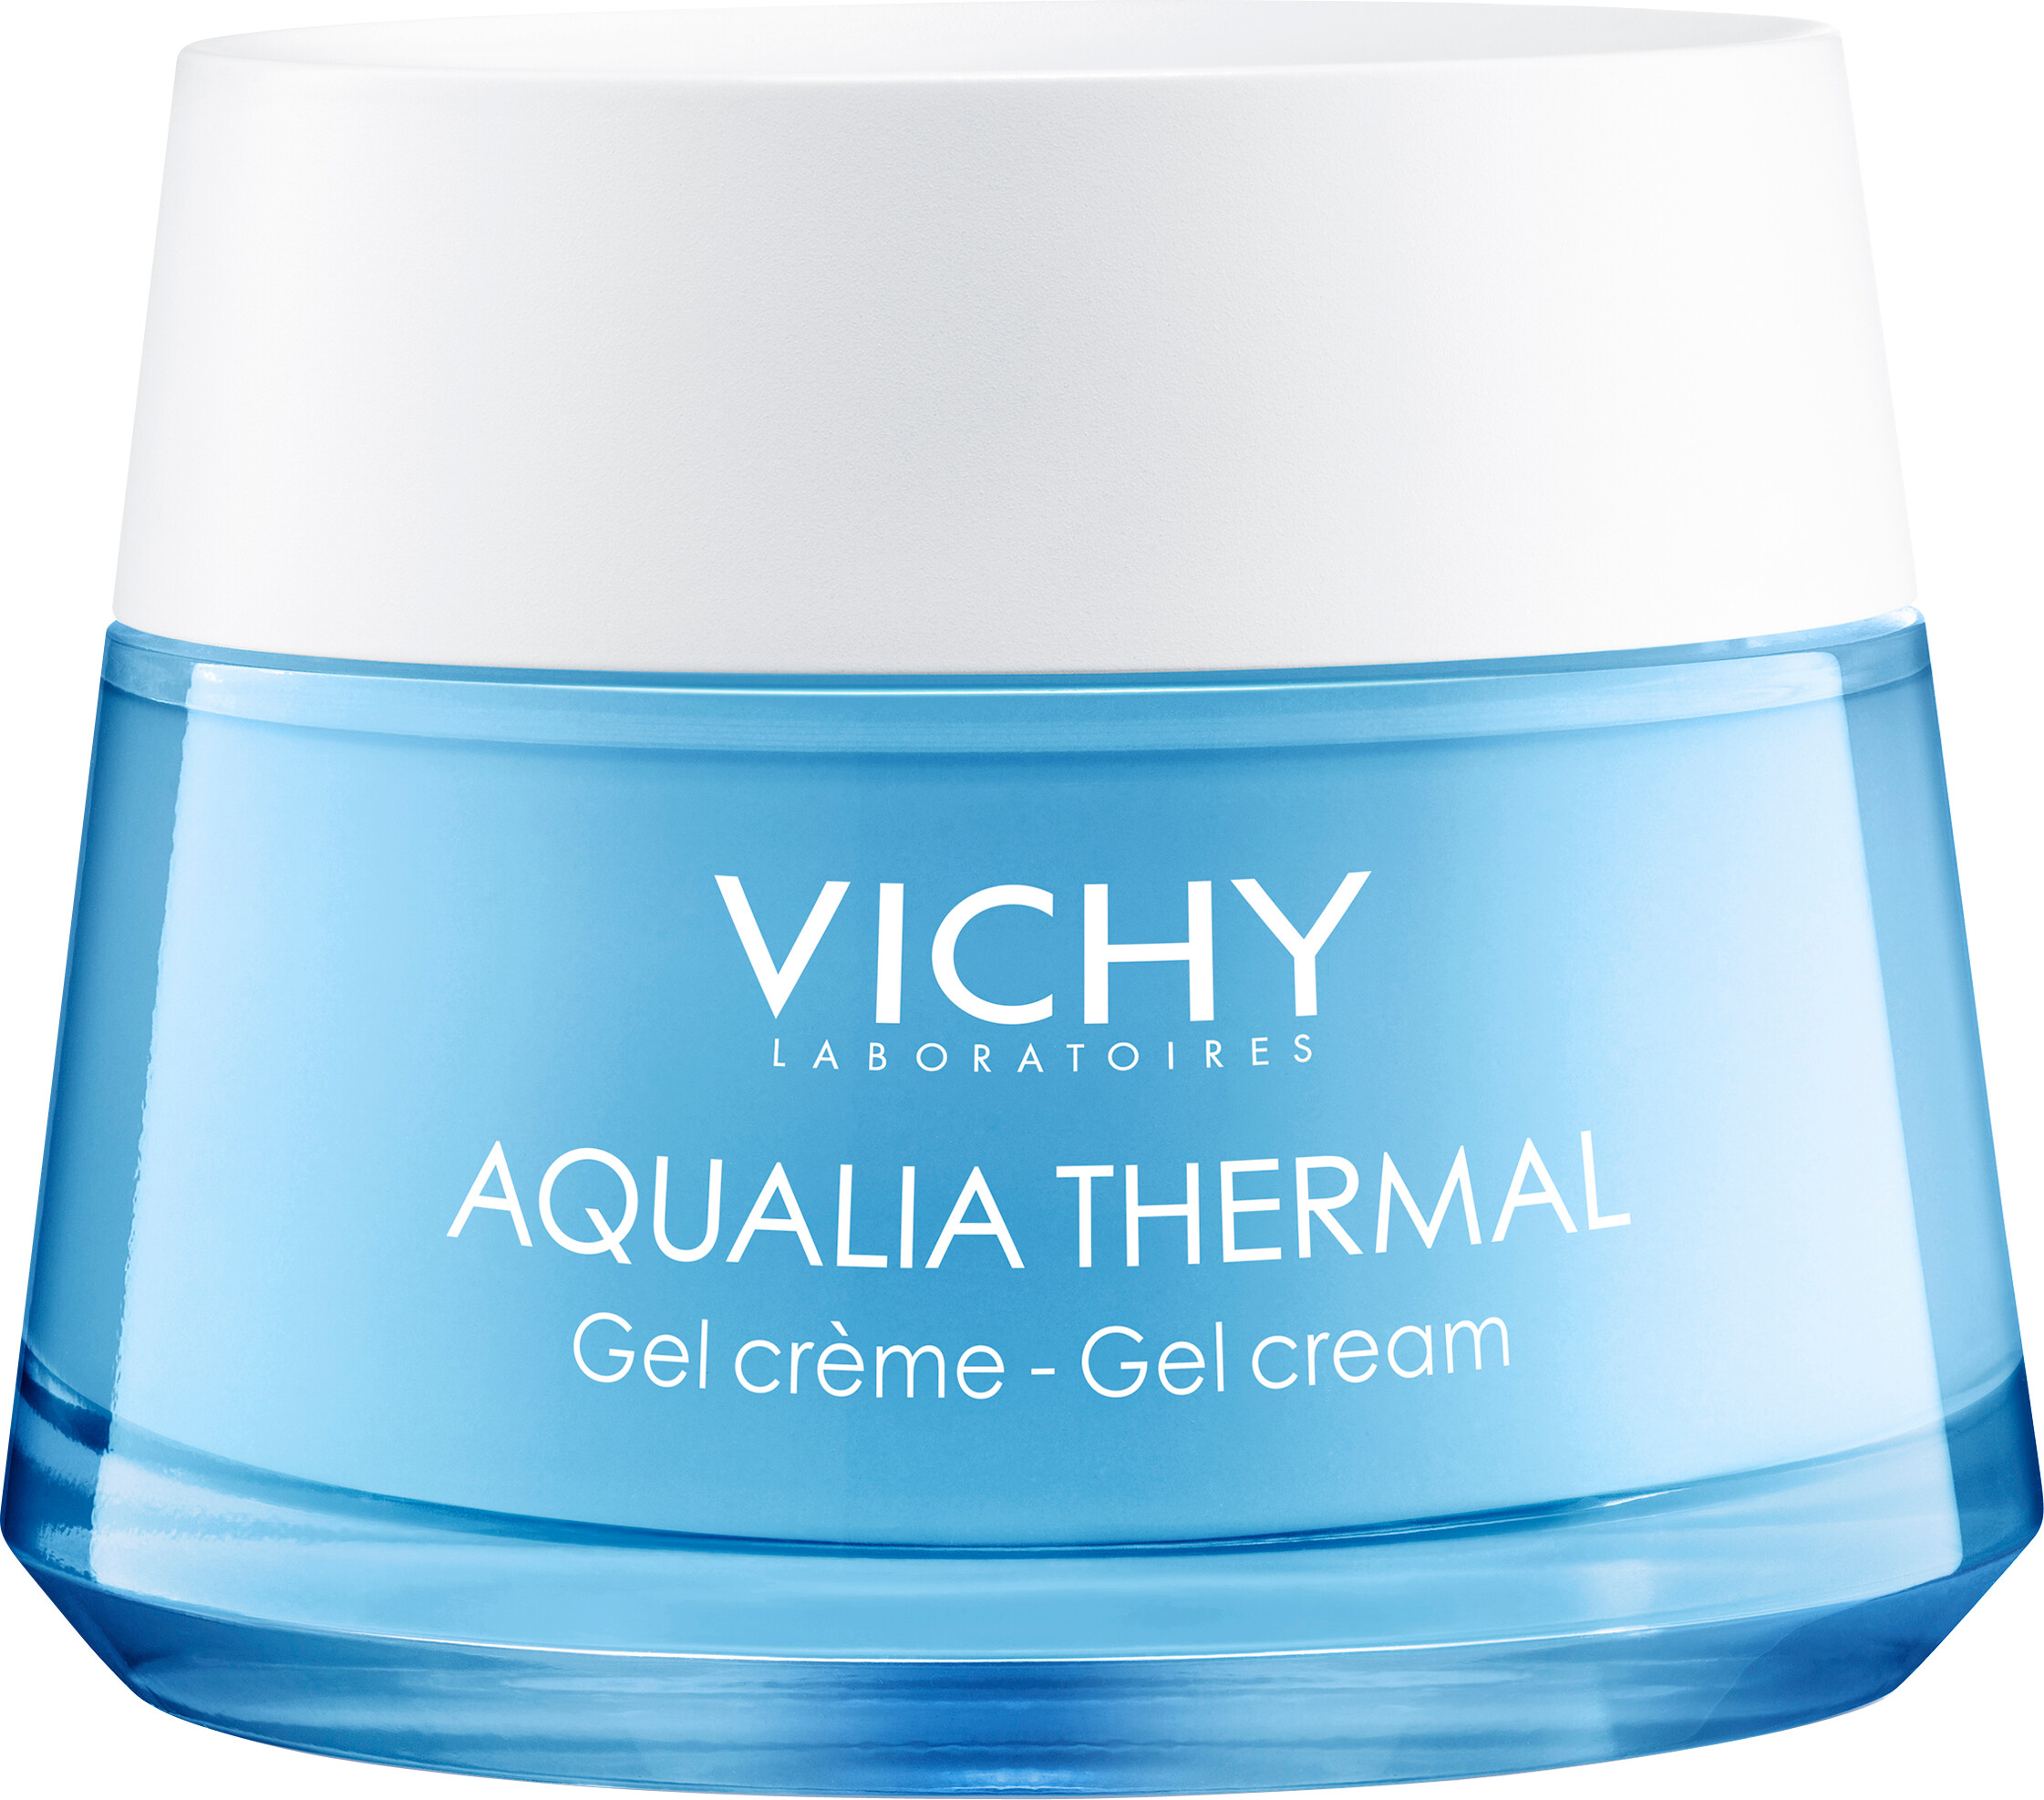 Vichy Aqualia Thermal Rehydrating Gel Cream - Combination Skin 50ml